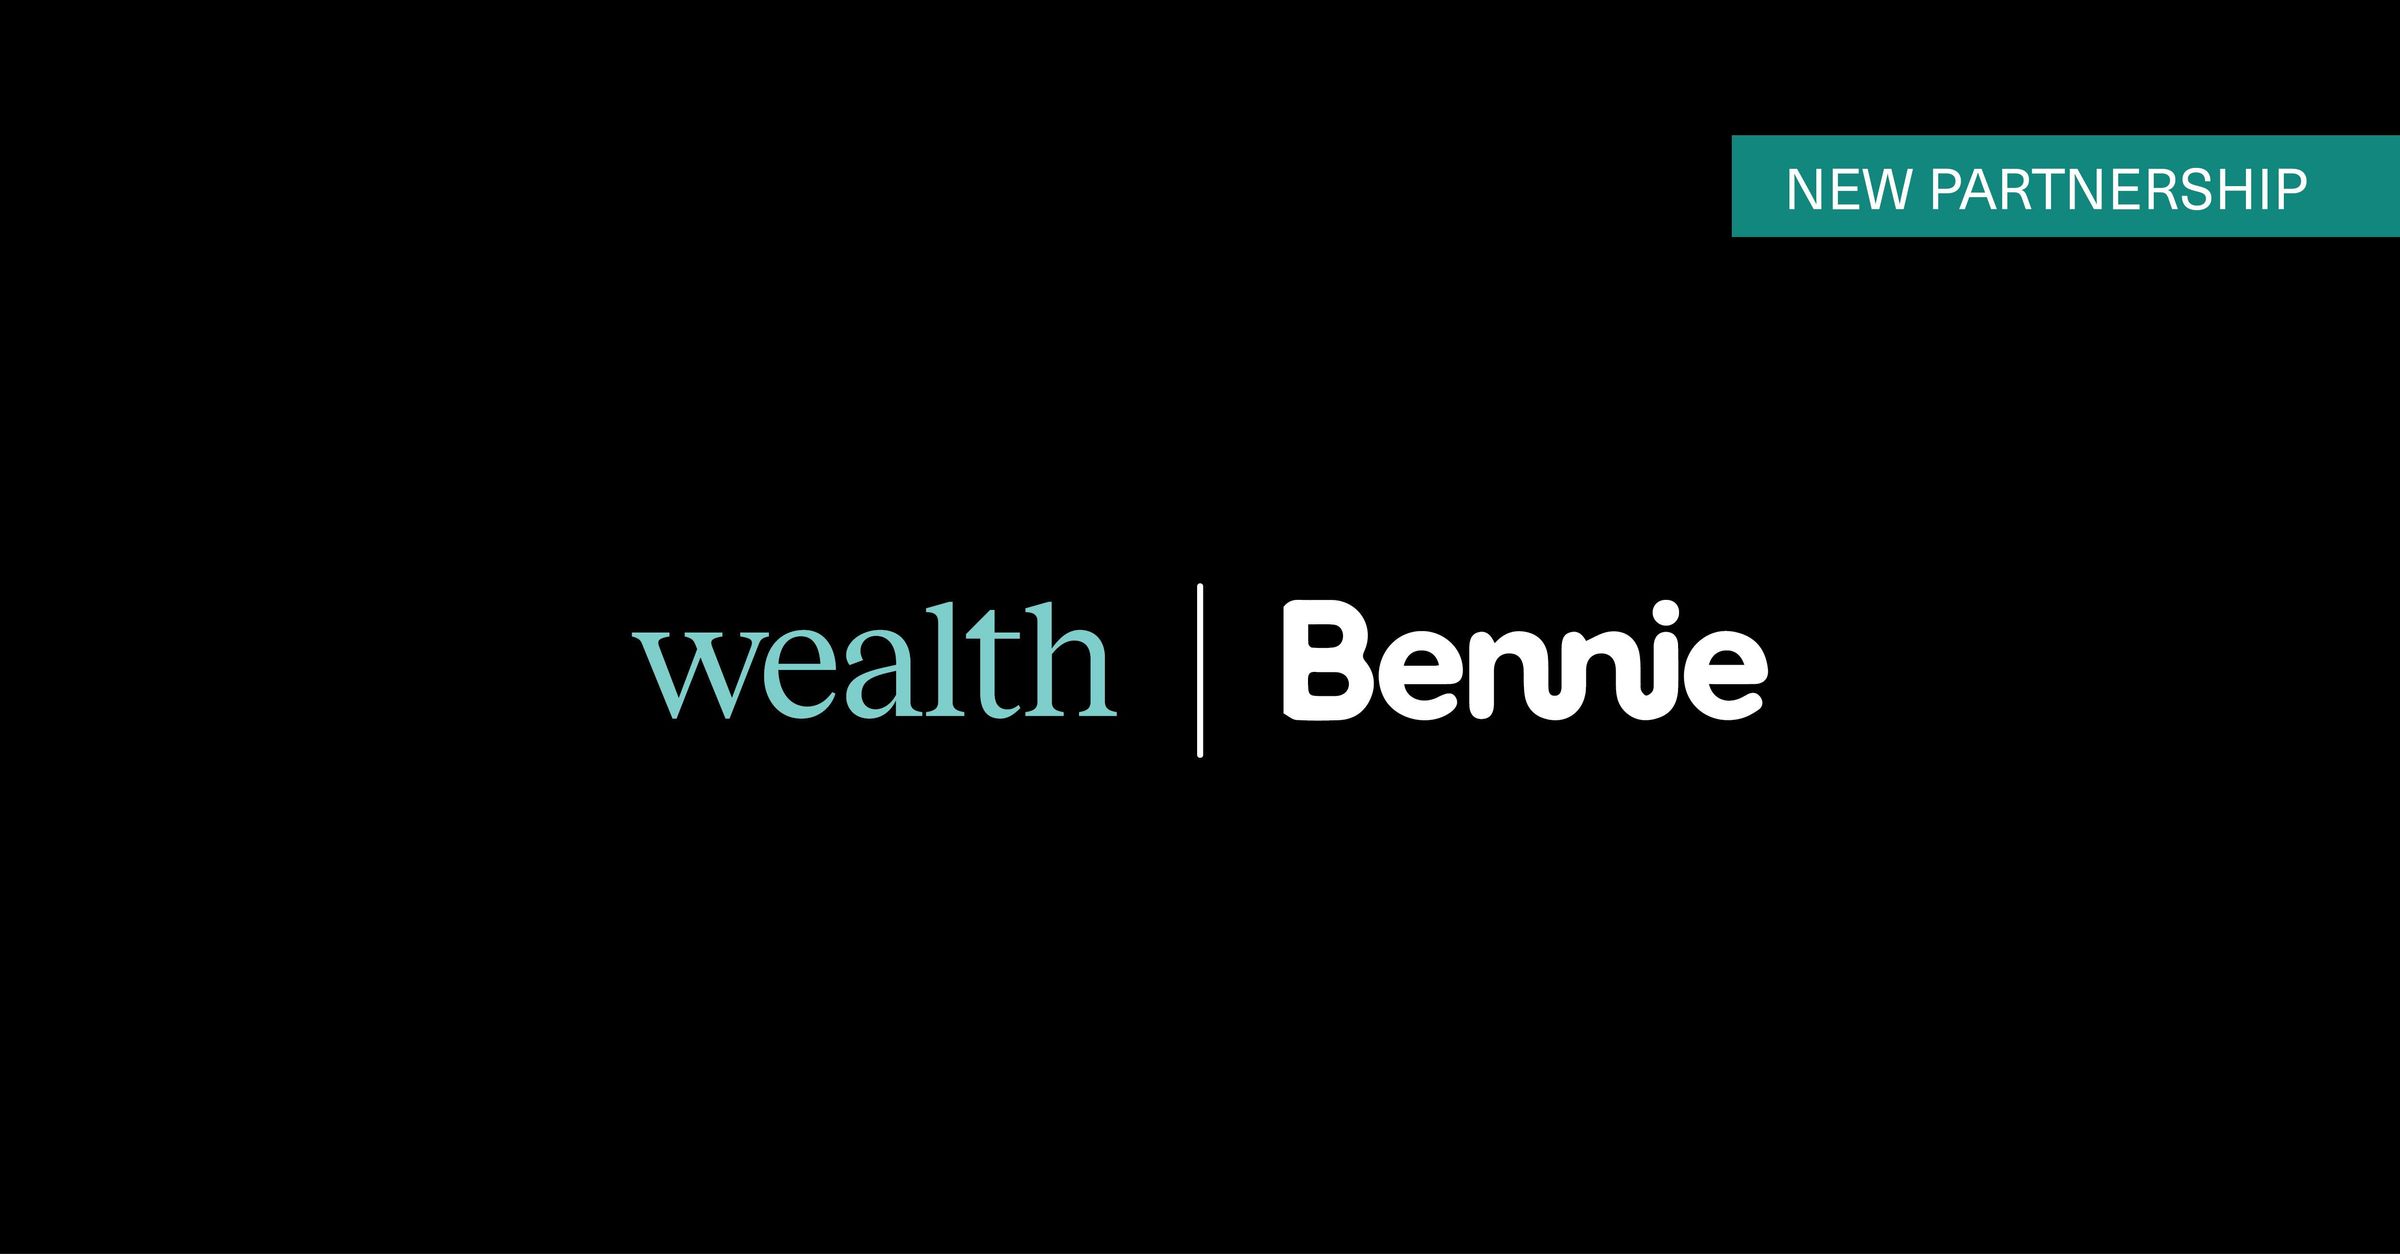 Wealth Inc and Bennie logos